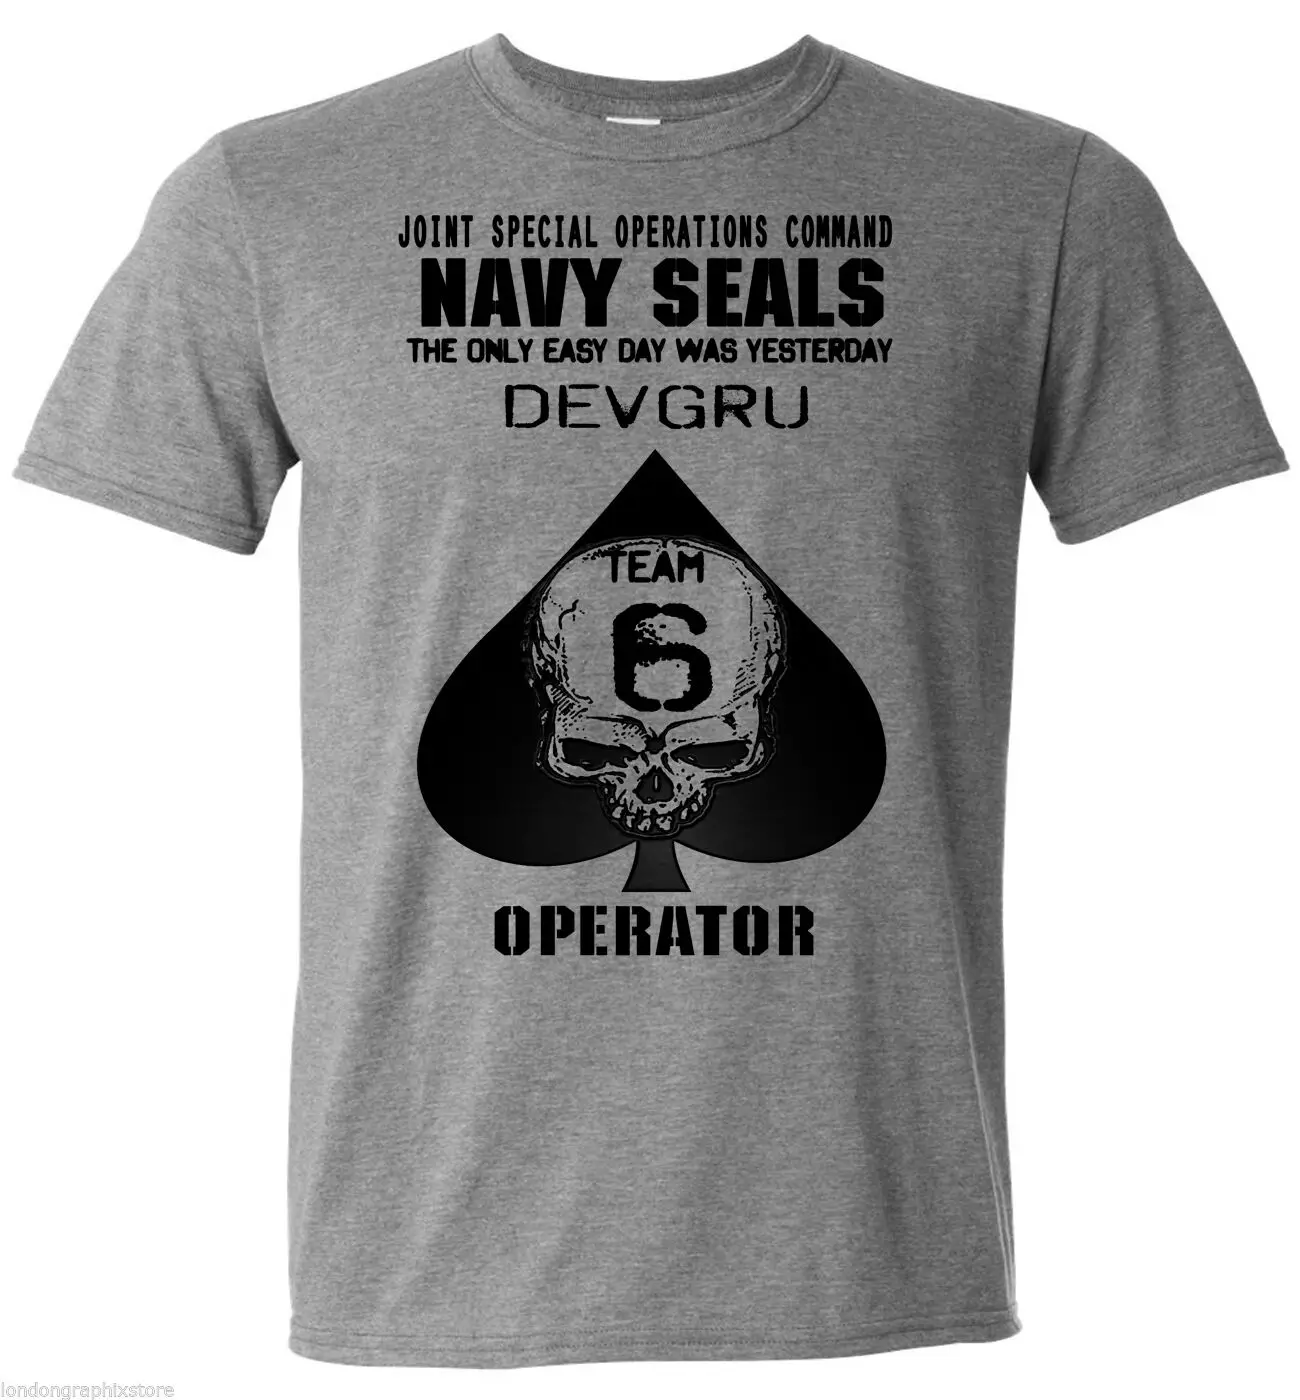 Navy Seals Devgru Team Operator Military T-Shirt. Summer Cotton Short Sleeve O-Neck Mens T Shirt New S-3XL